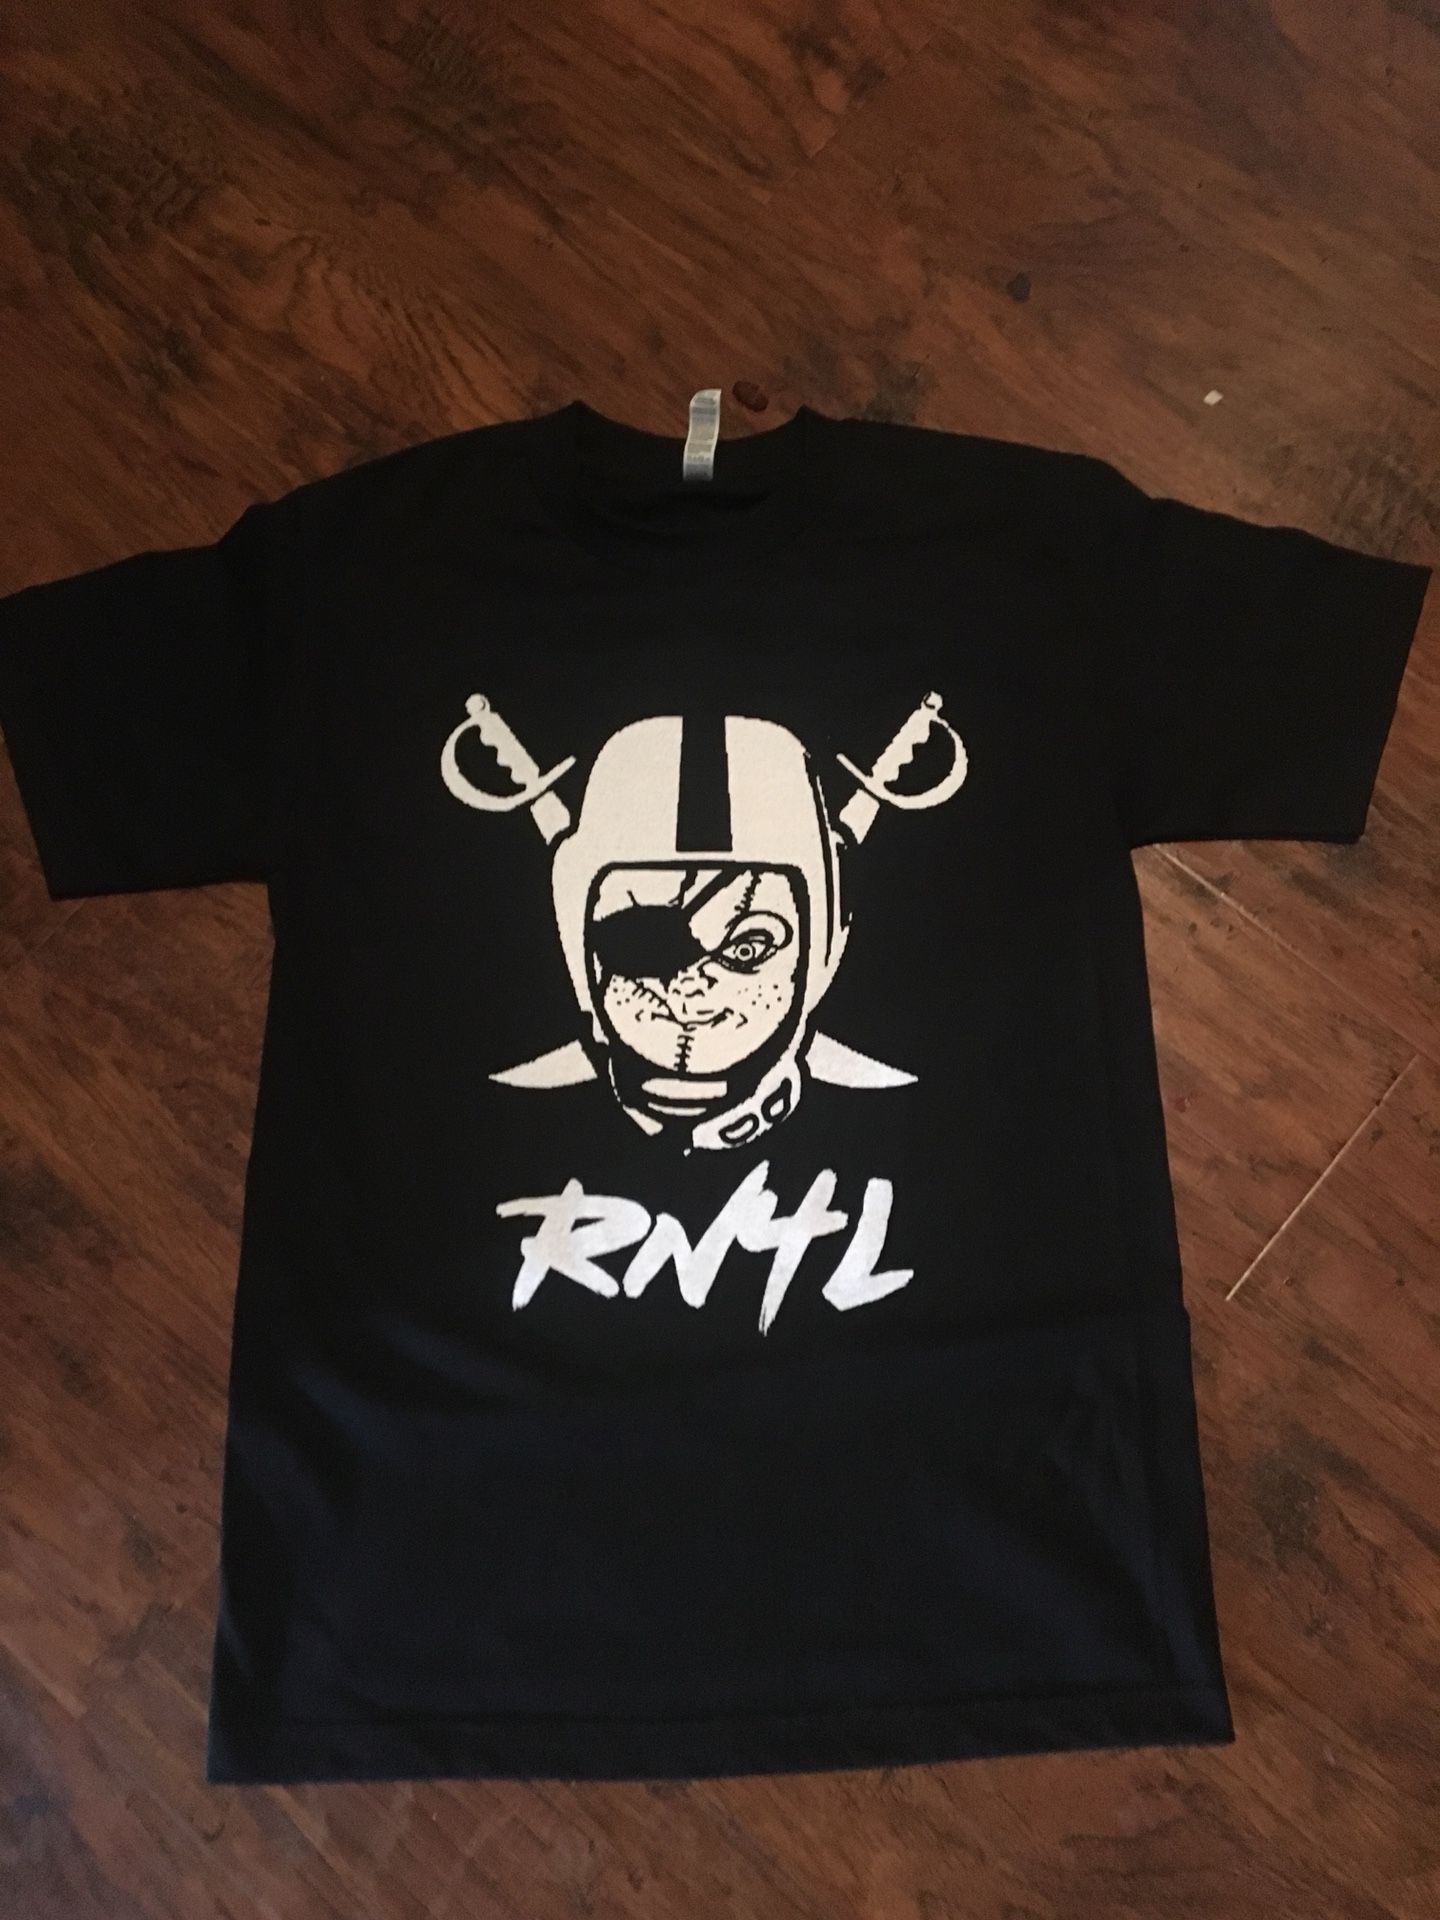 Raiders shirt raider nation shirts gruden shirt